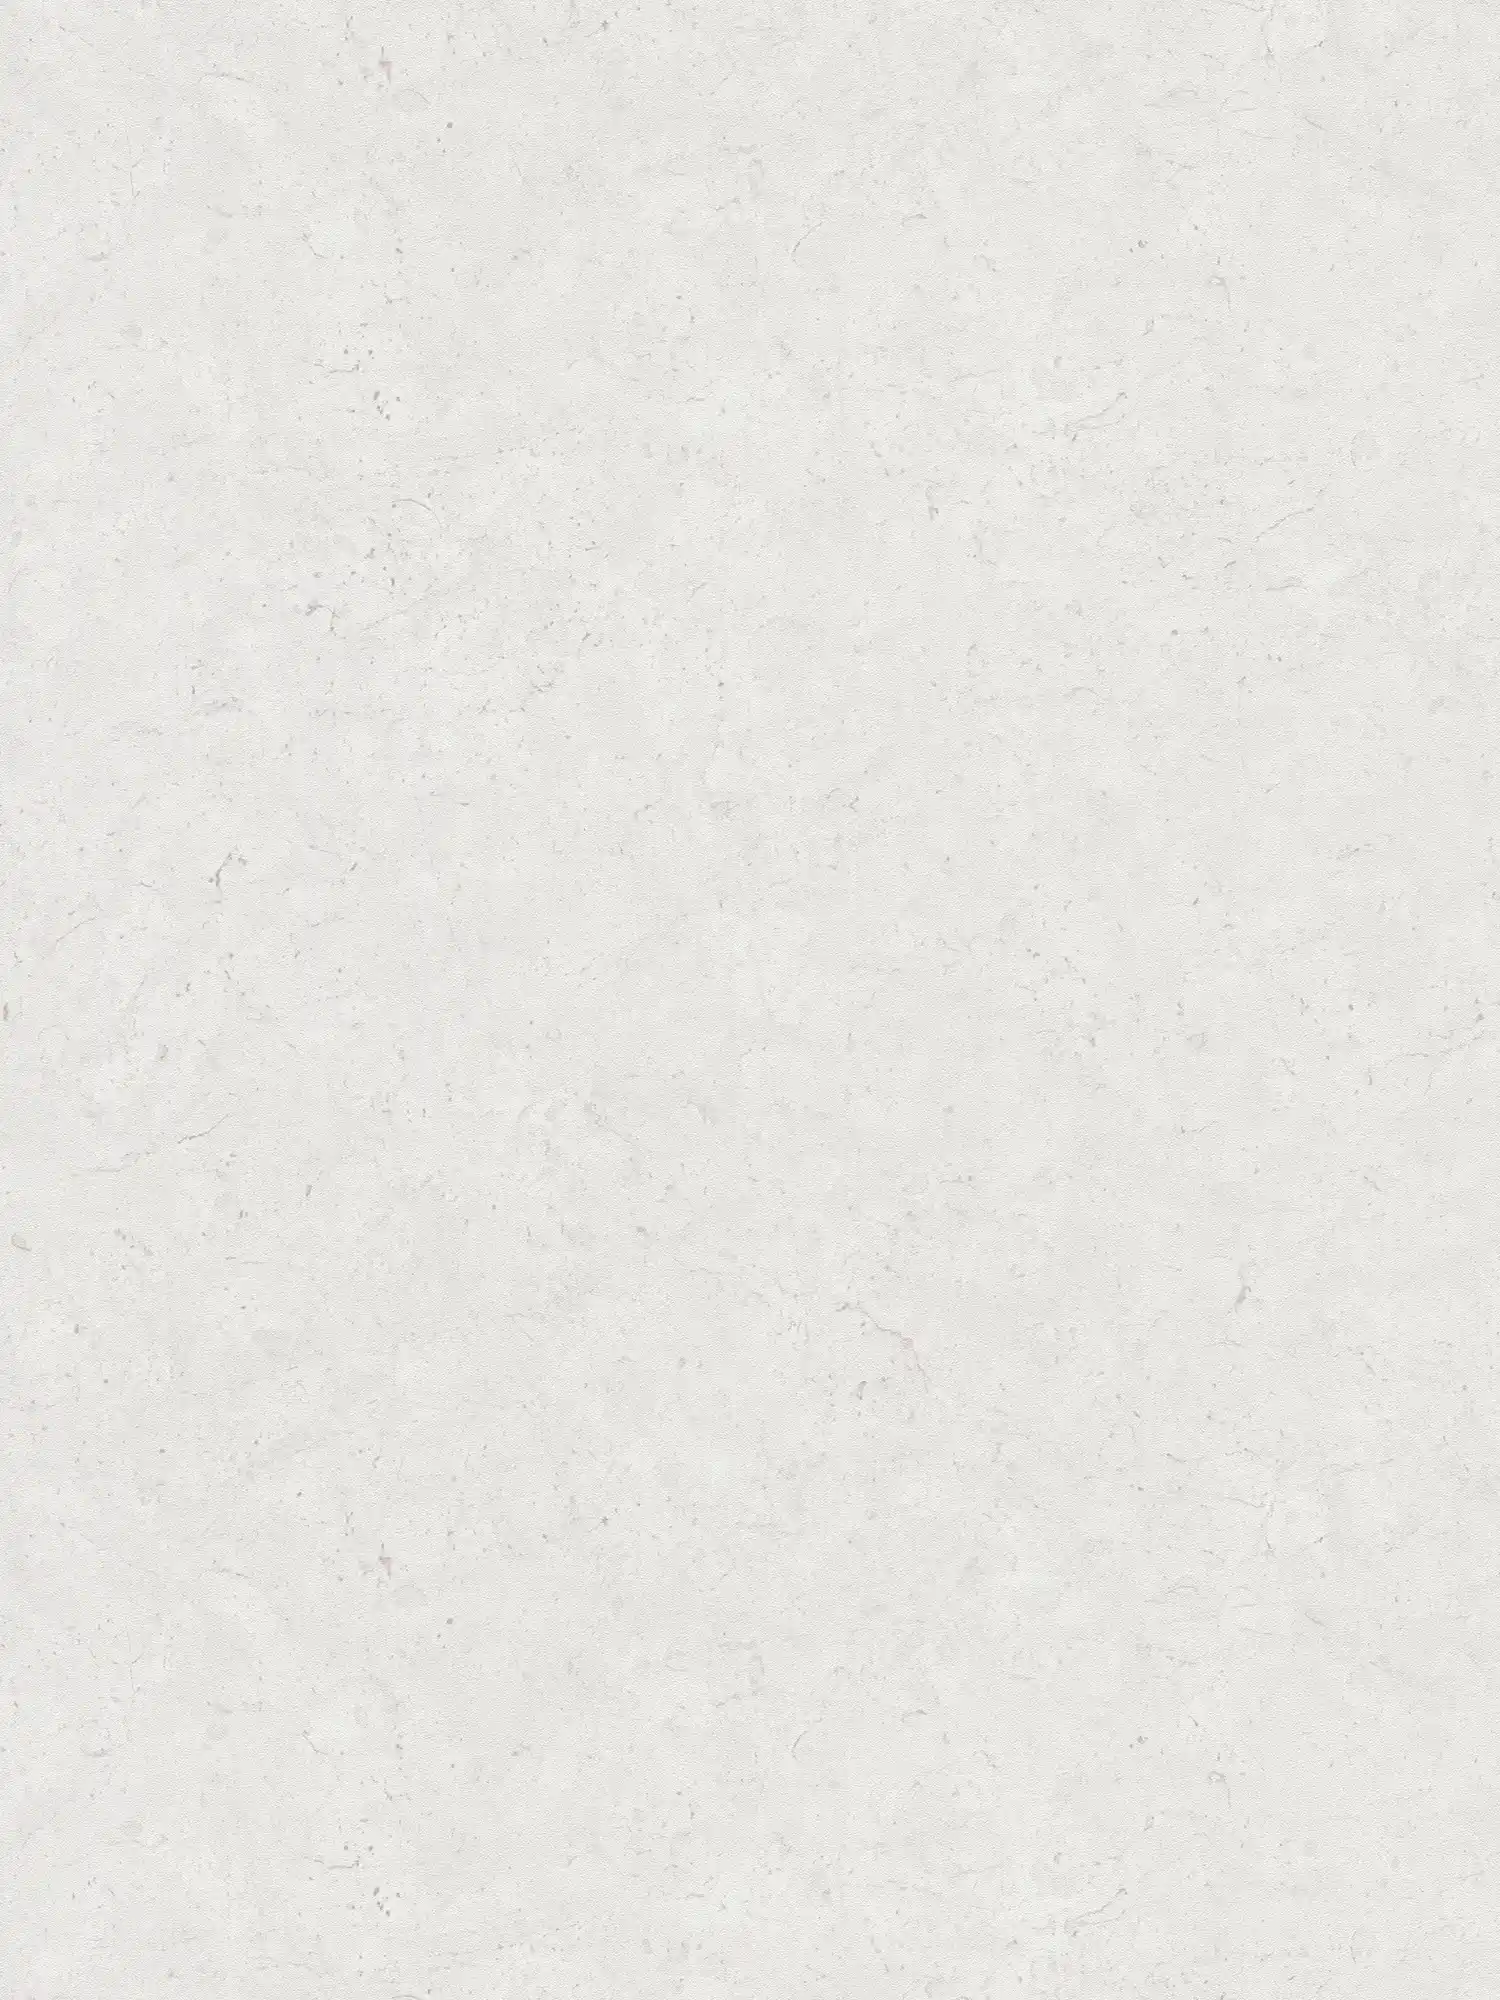 Non-woven wallpaper plain with concrete look - grey, white
